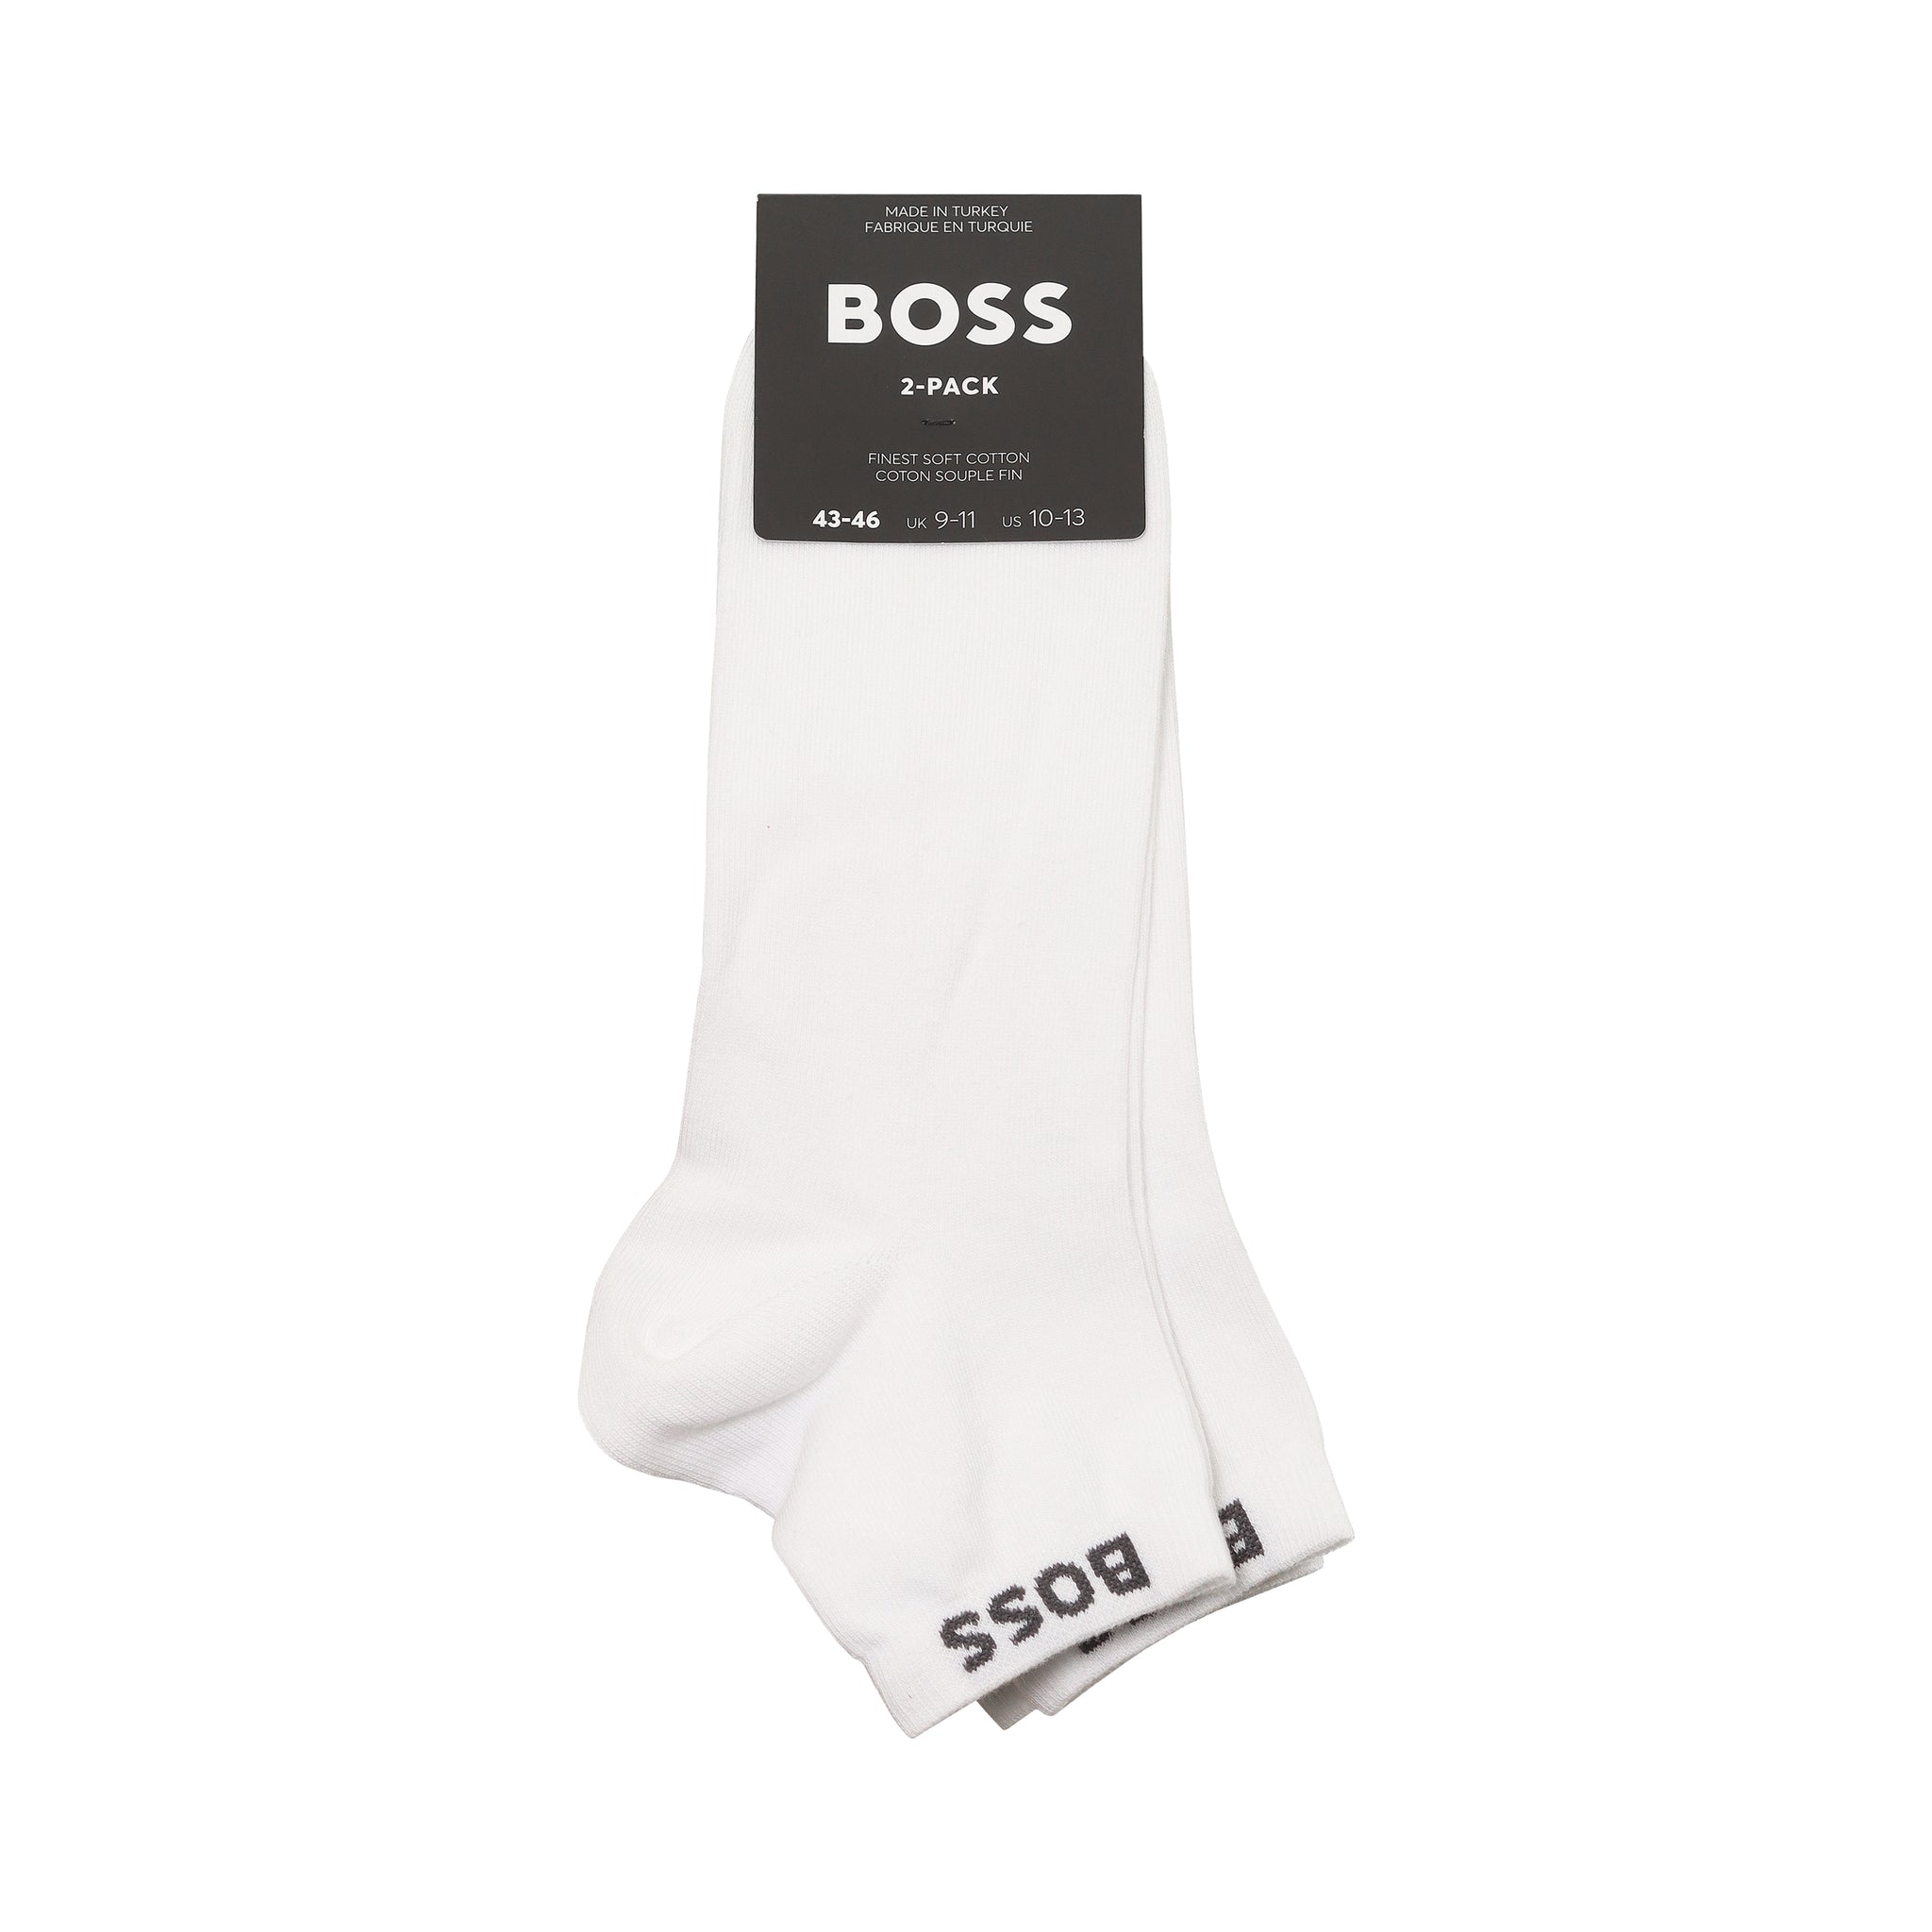 BOSS 2 Pair SH Ankle Socks